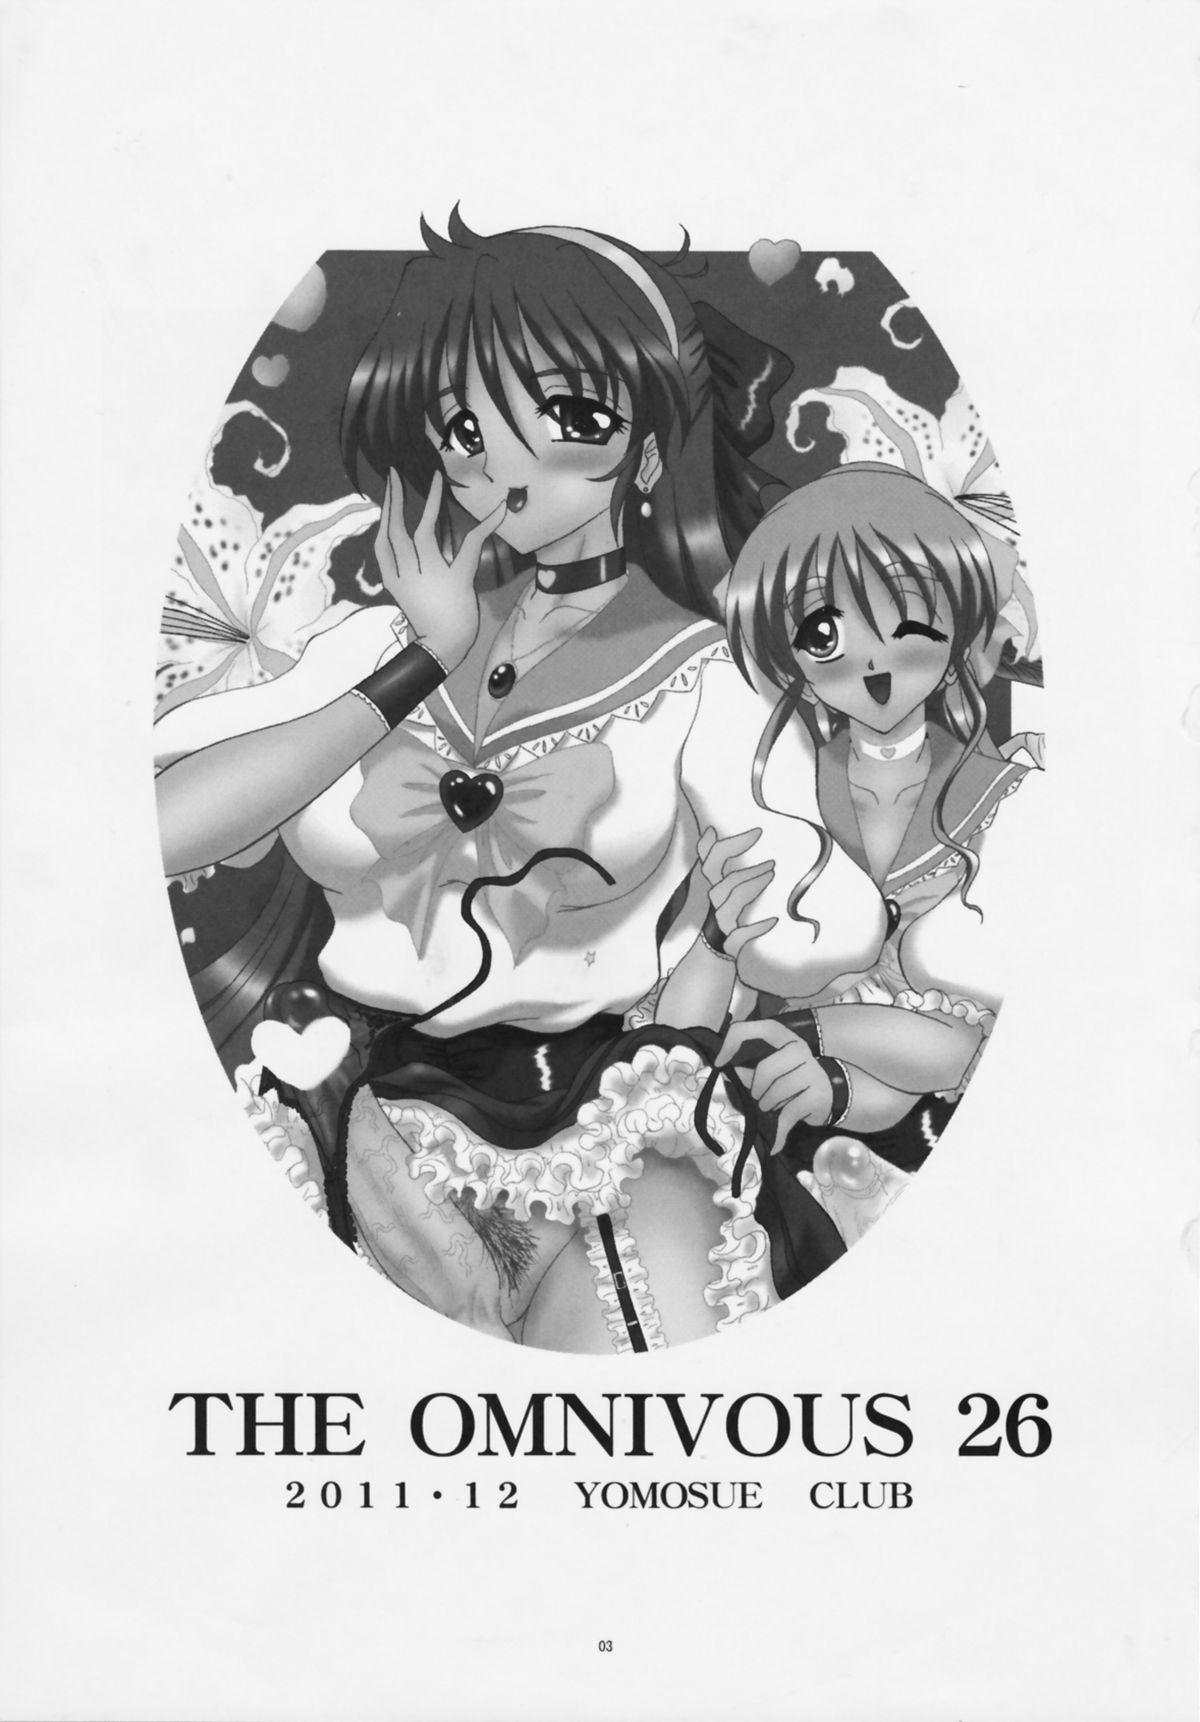 THE OMNIVOUS 26 2